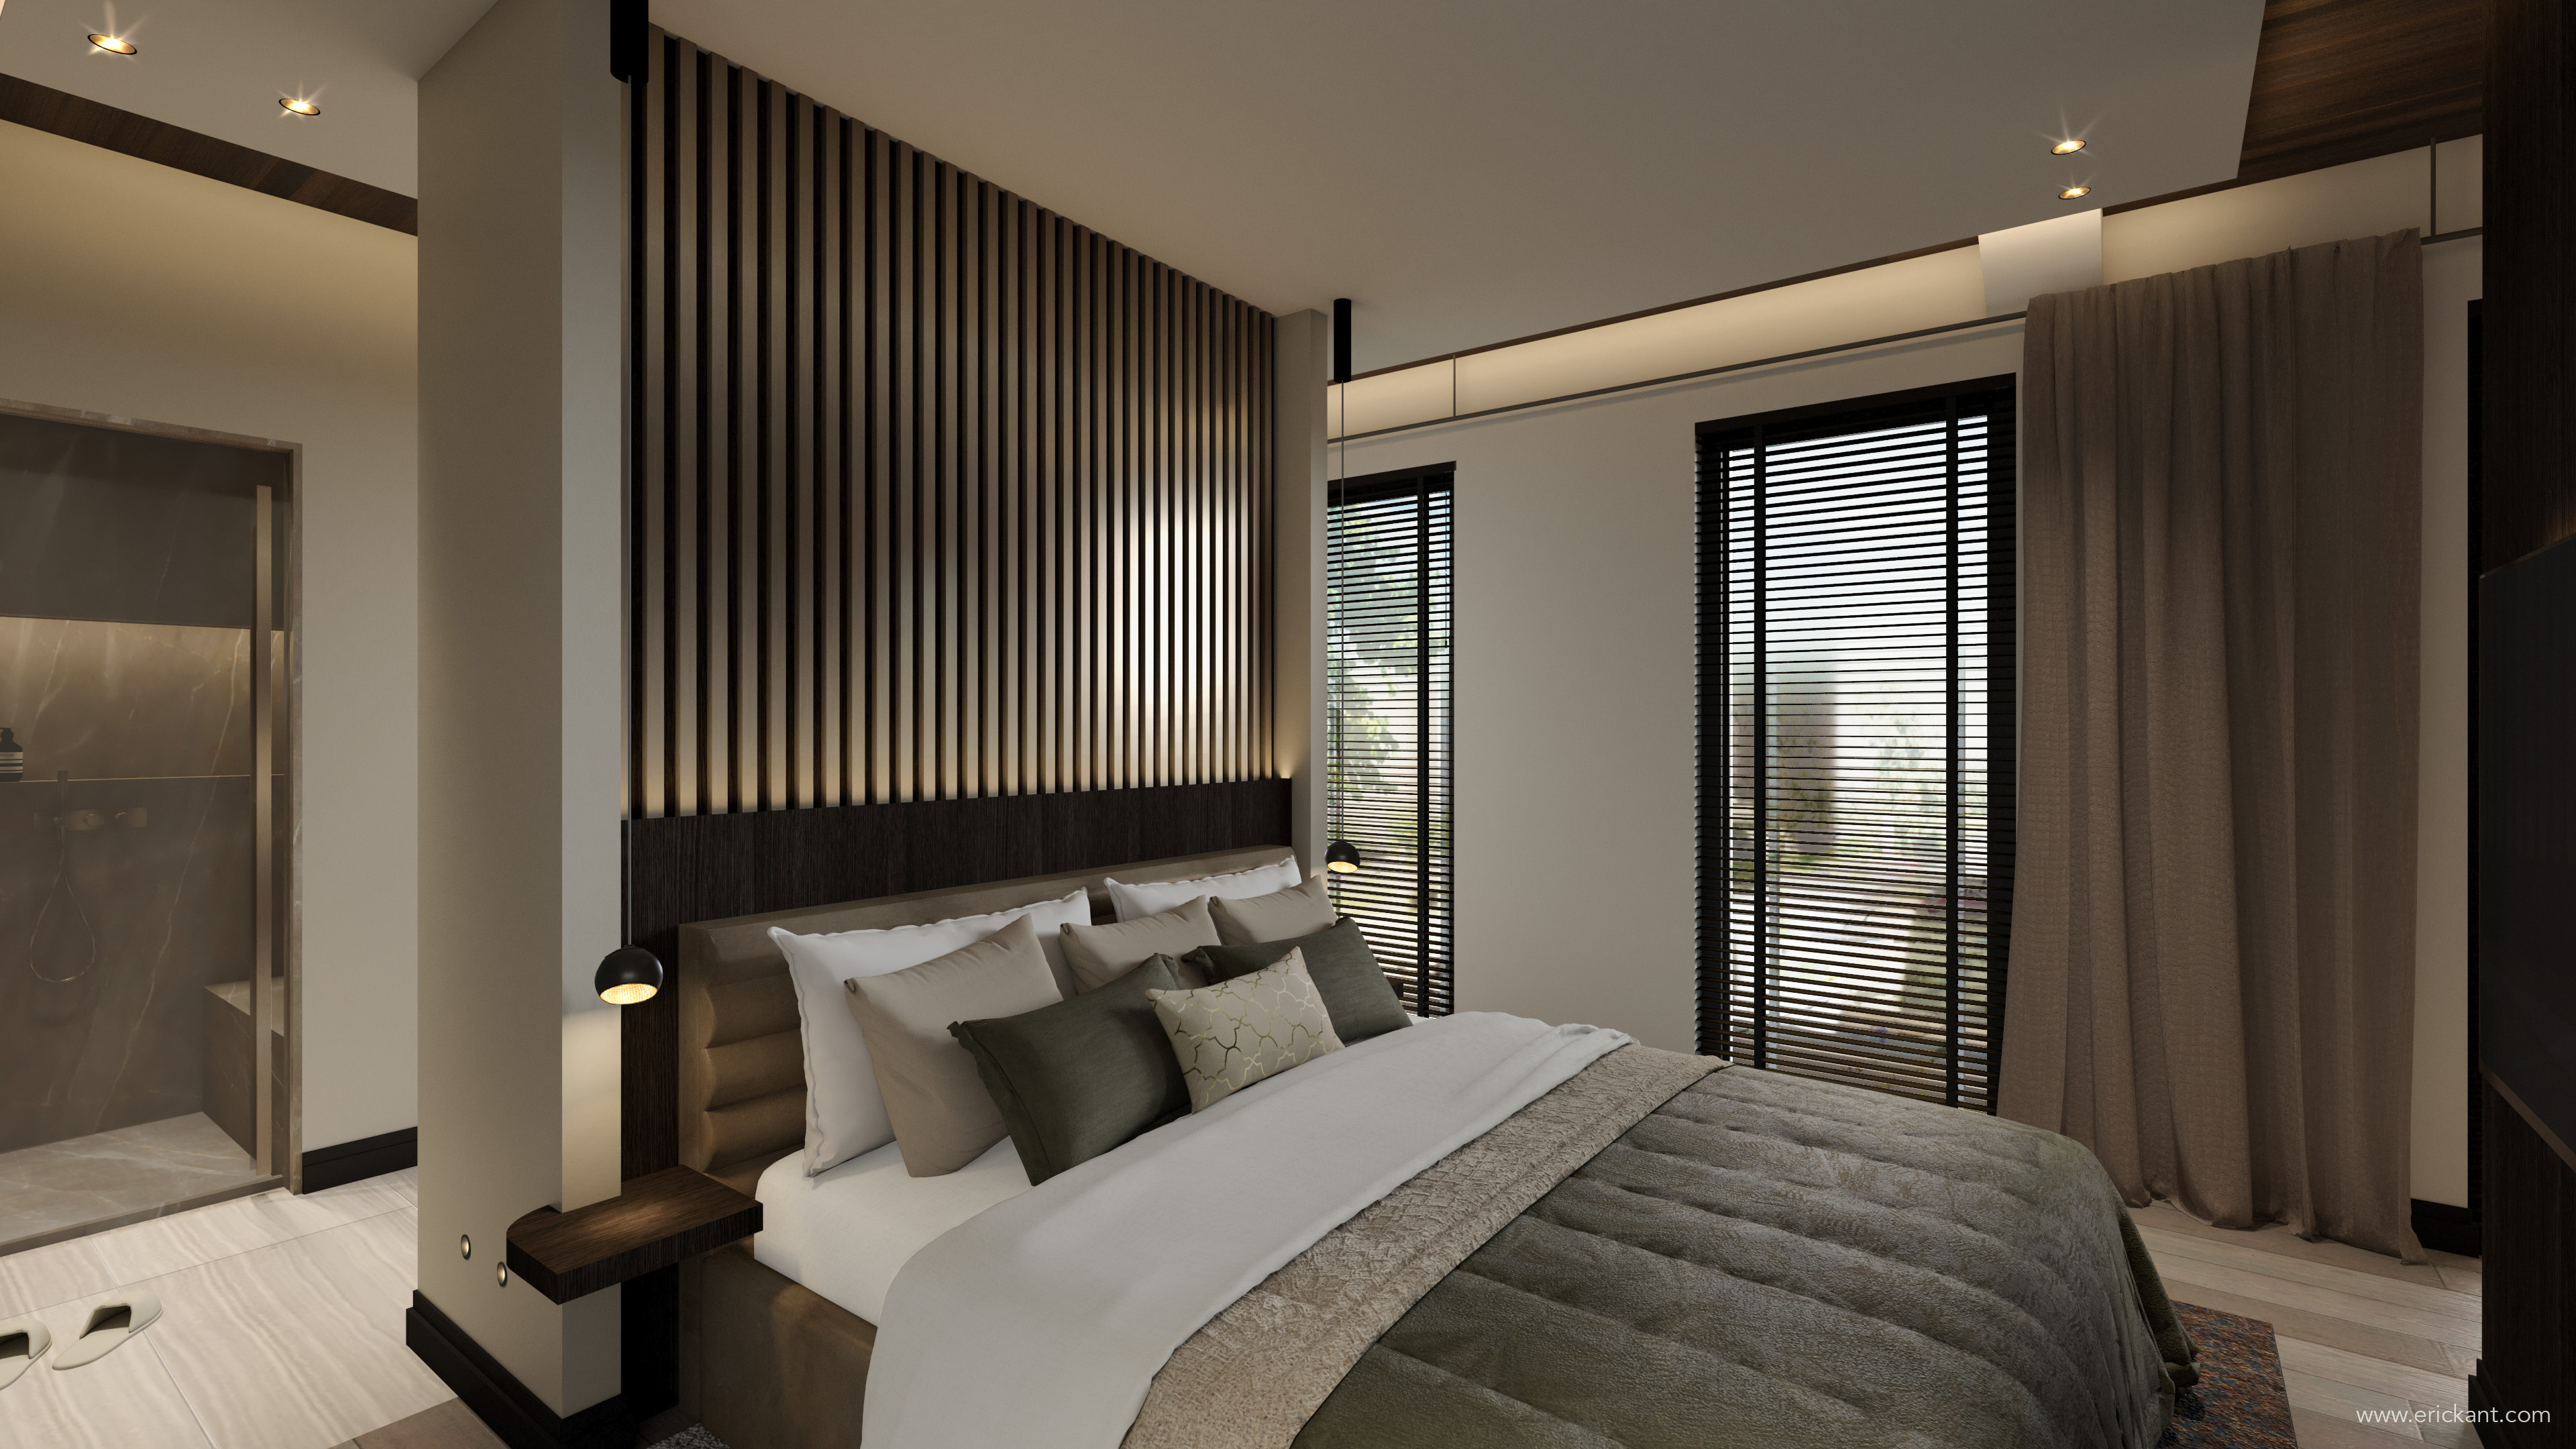 Penthouse-Luxury-Master-Bedroom-Design-Eric-Kant.jpg